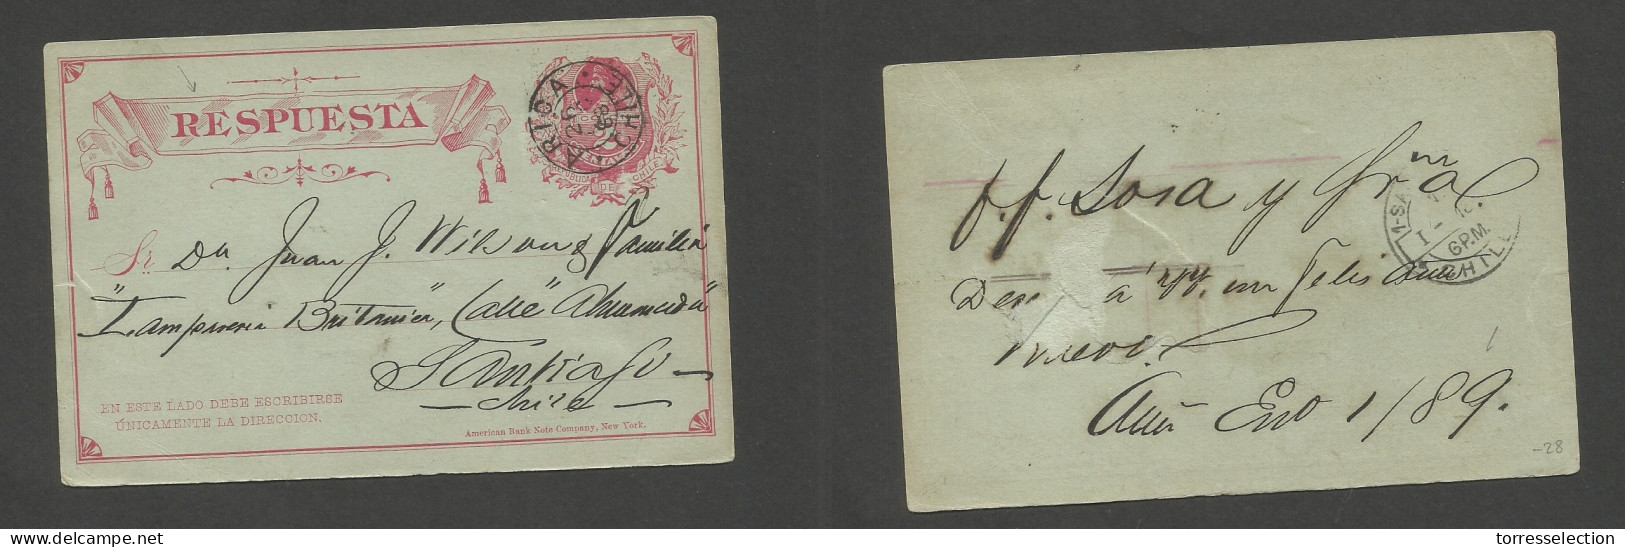 CHILE - Stationery. 1888 (26 Dec) REPLY Half. Proper Usage Back. Arica - Stgo (1 Jan 1889) 2c Red Stat Card. SALE. - Chile